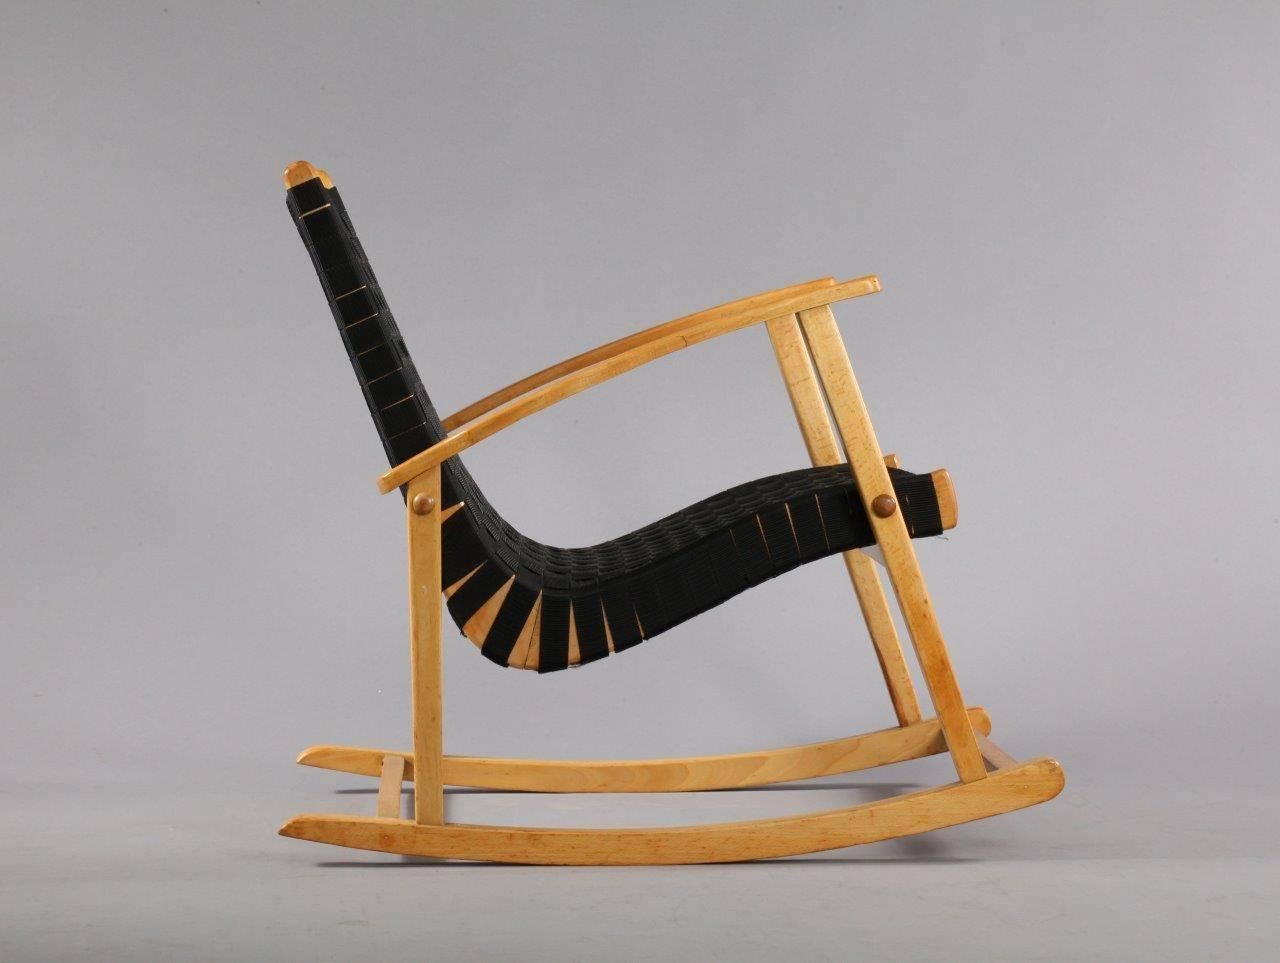 Rocking chair.
Attributed to Jens Risom,
Czech Republic, 1950.
Wood/beech.